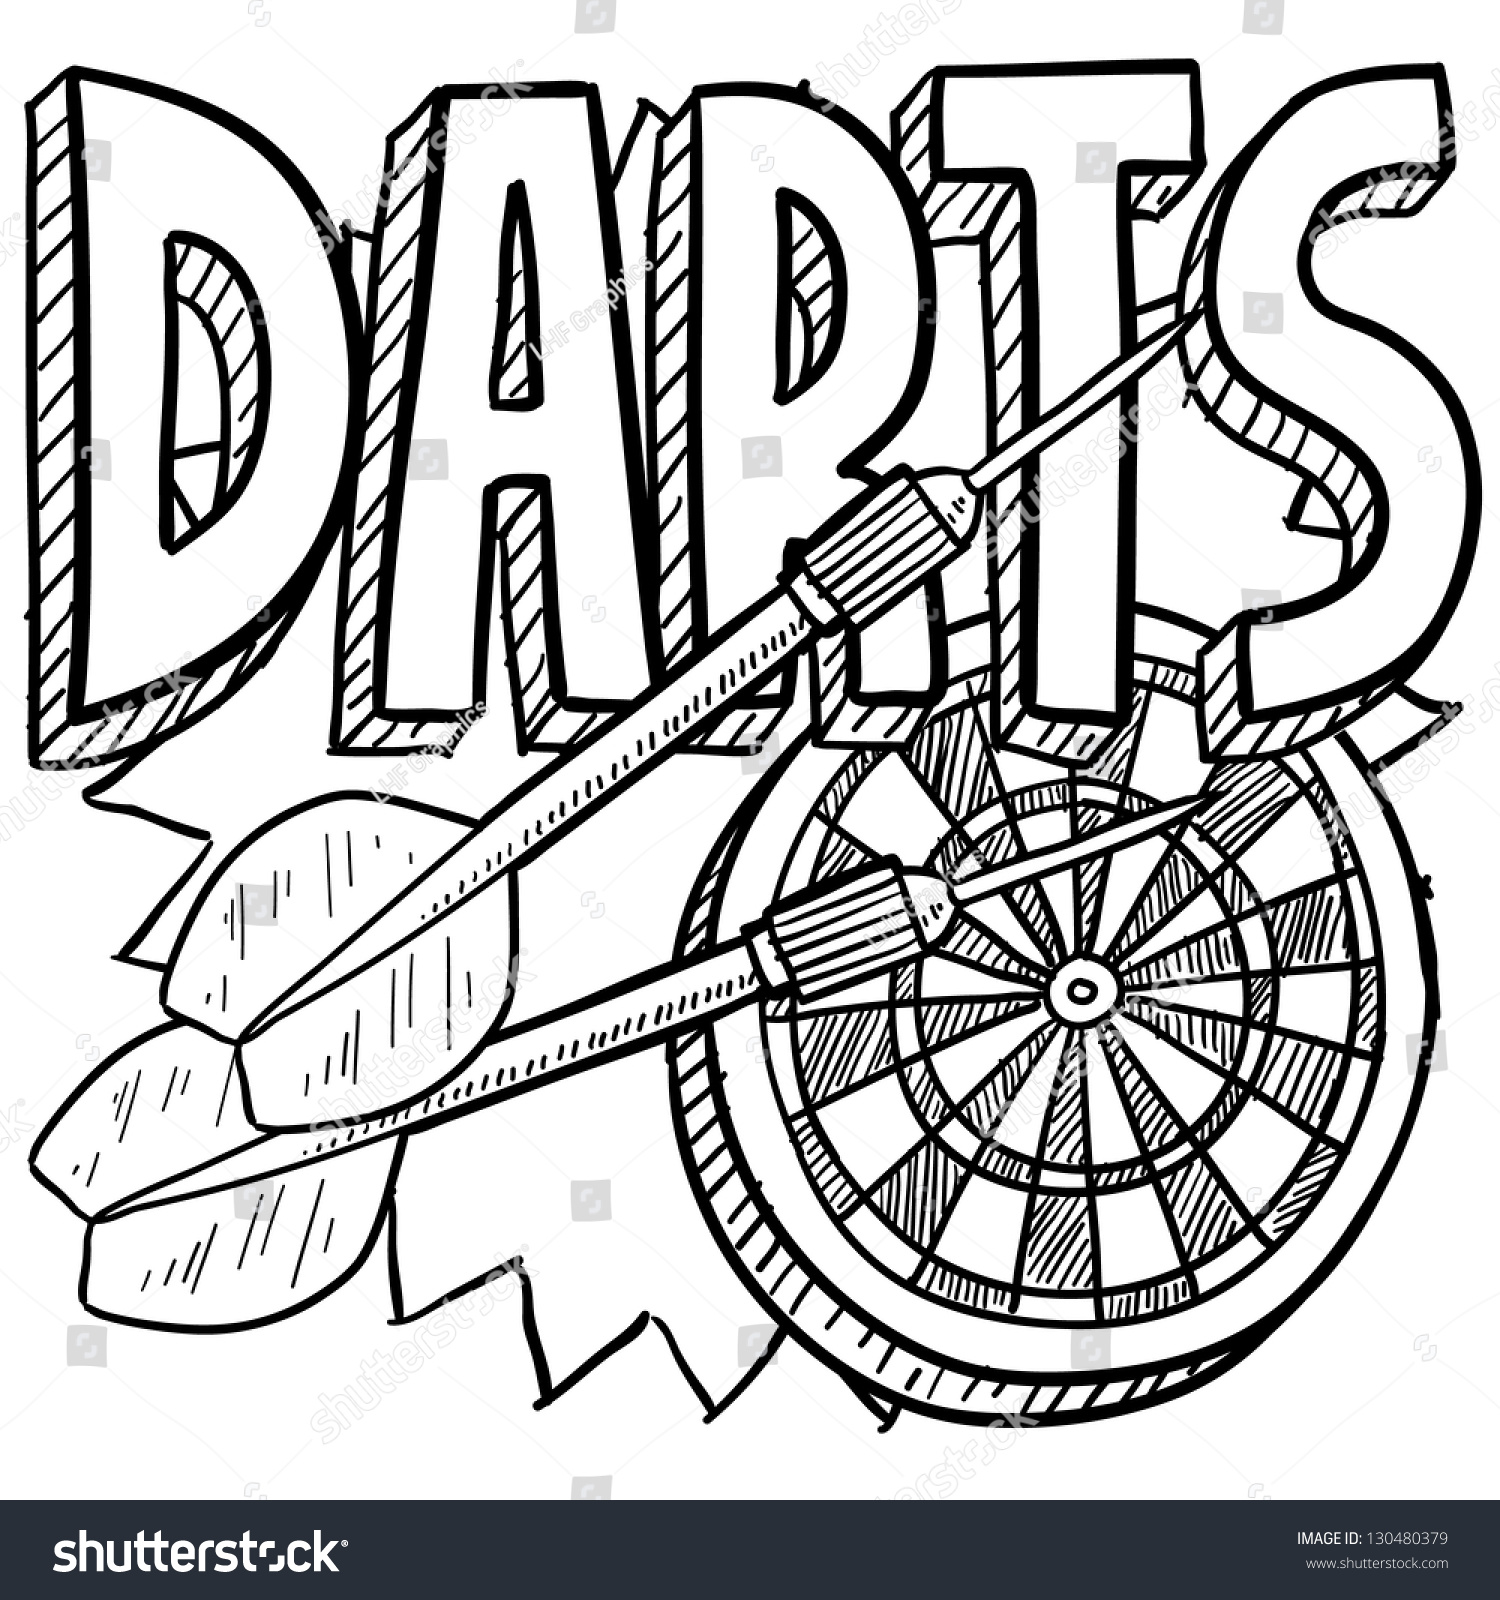 darts clipart illustrations - photo #20